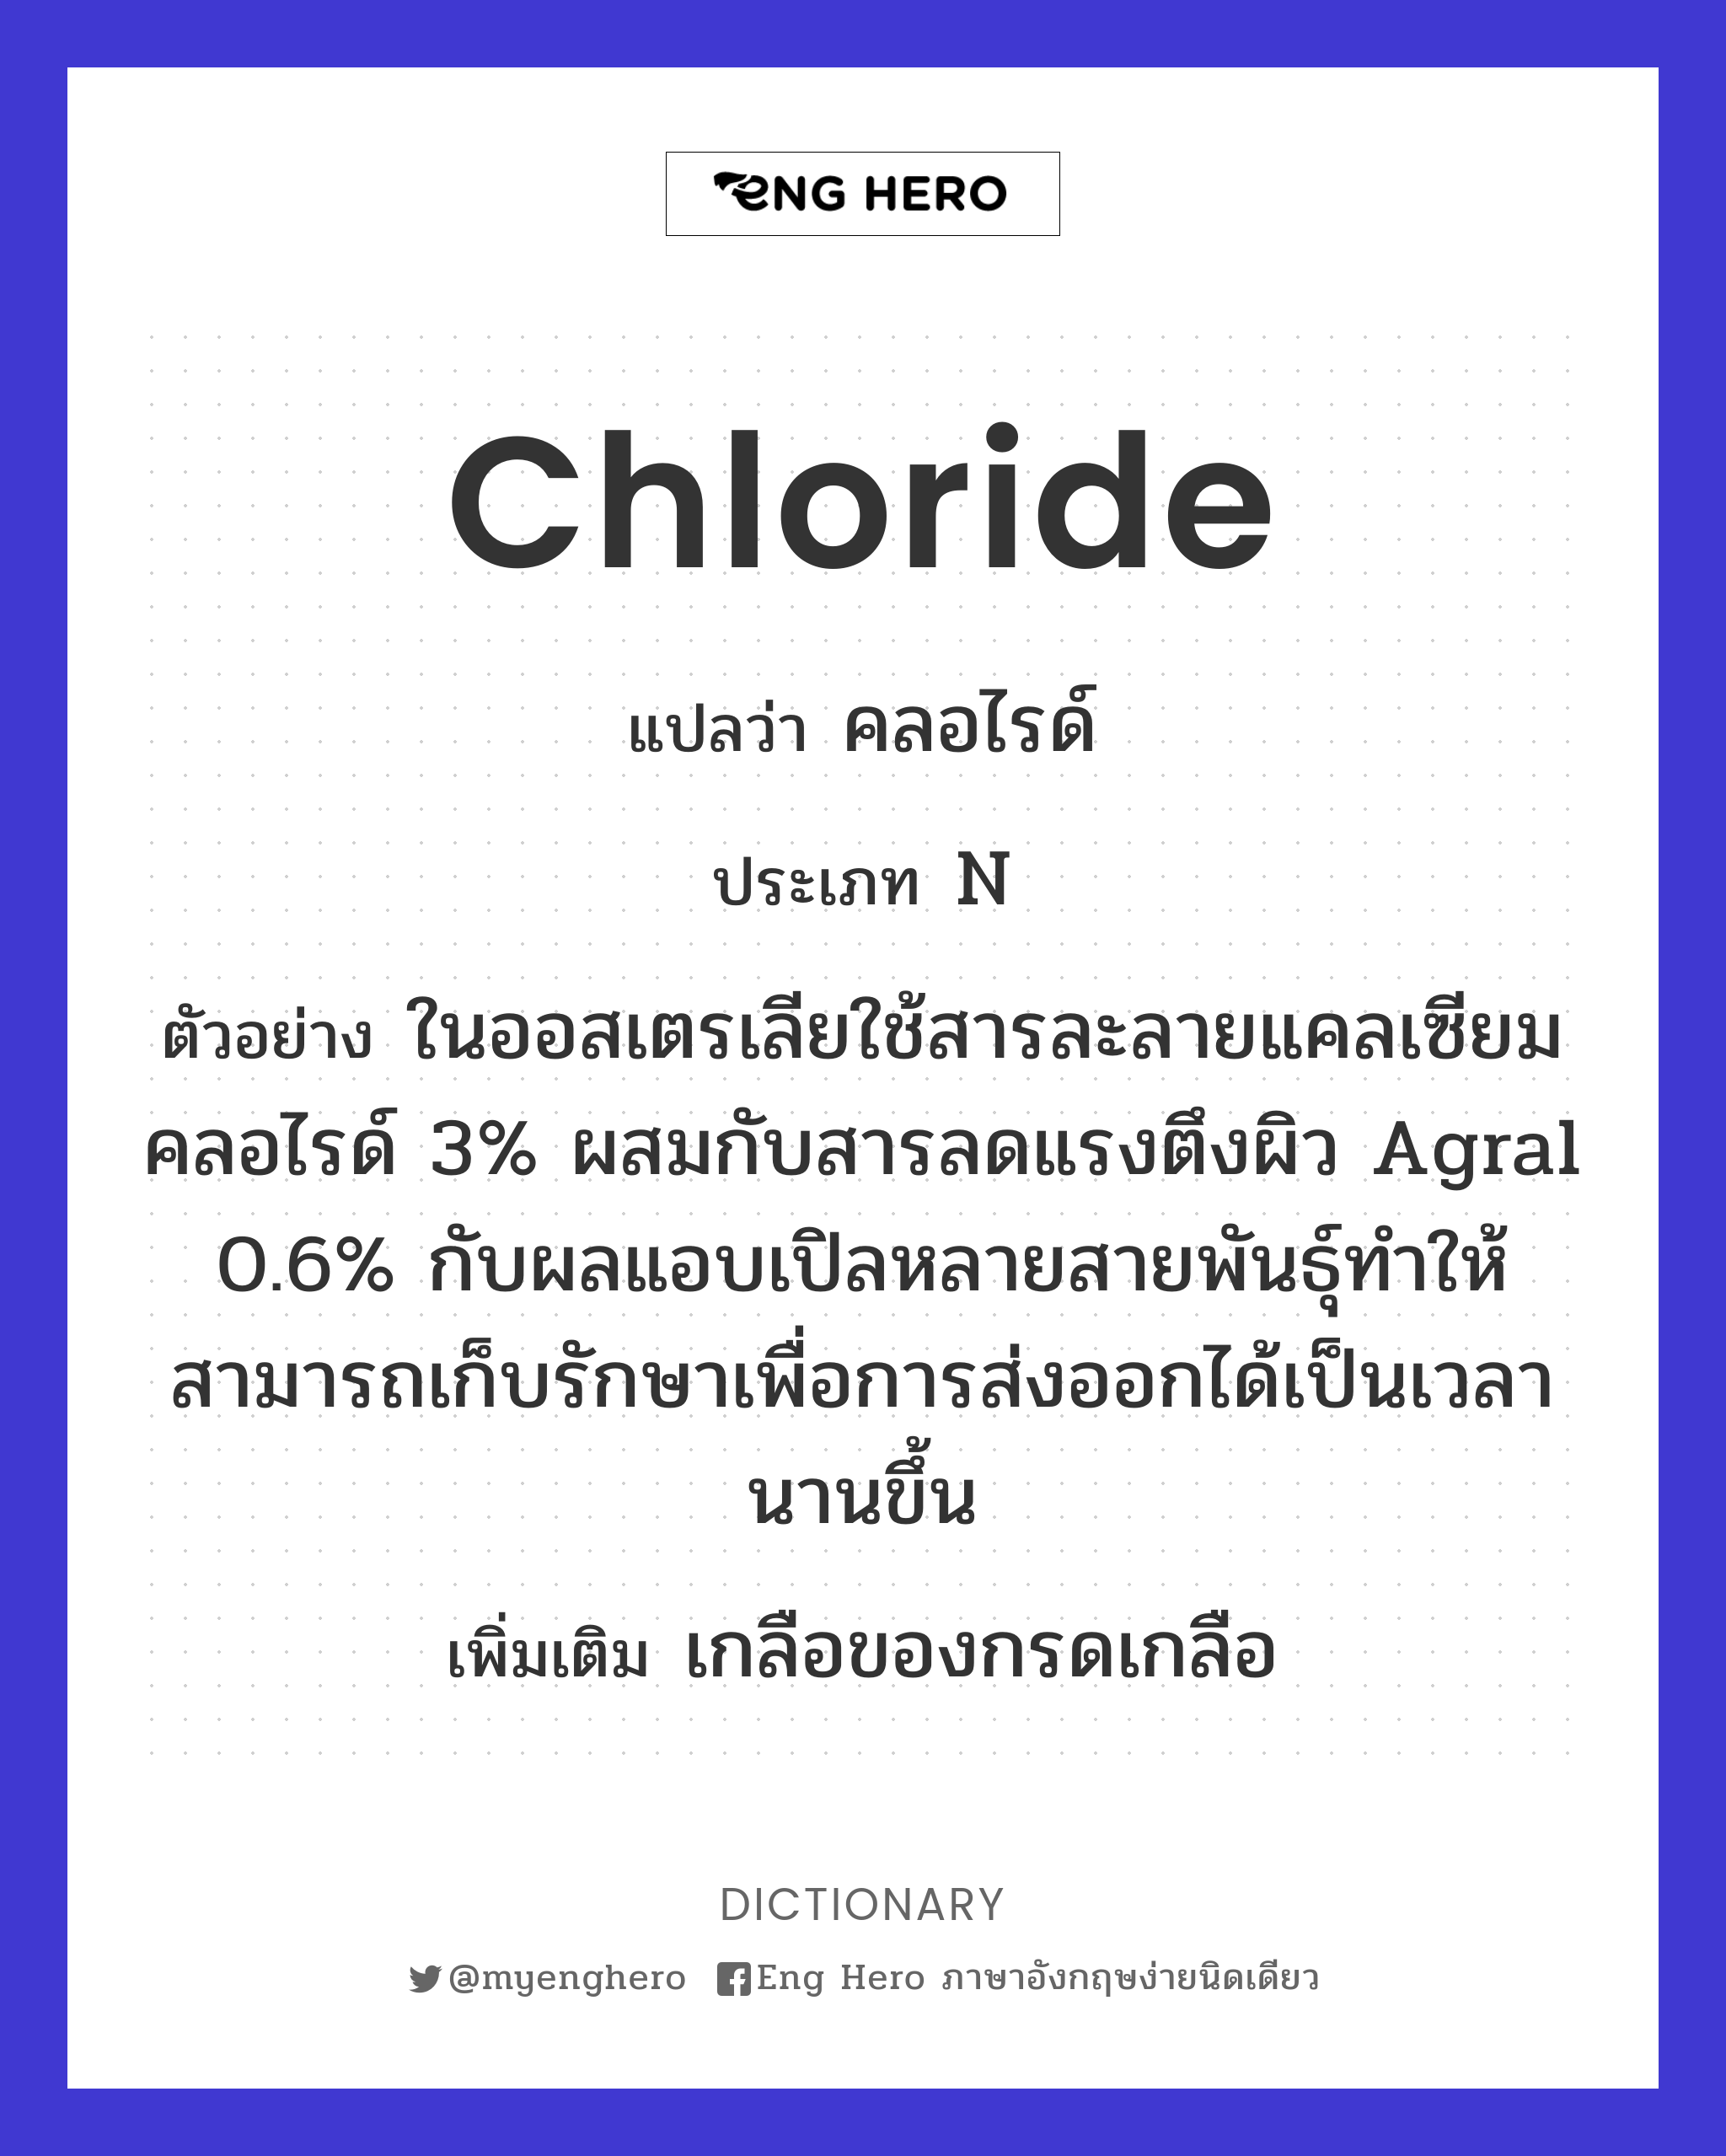 chloride